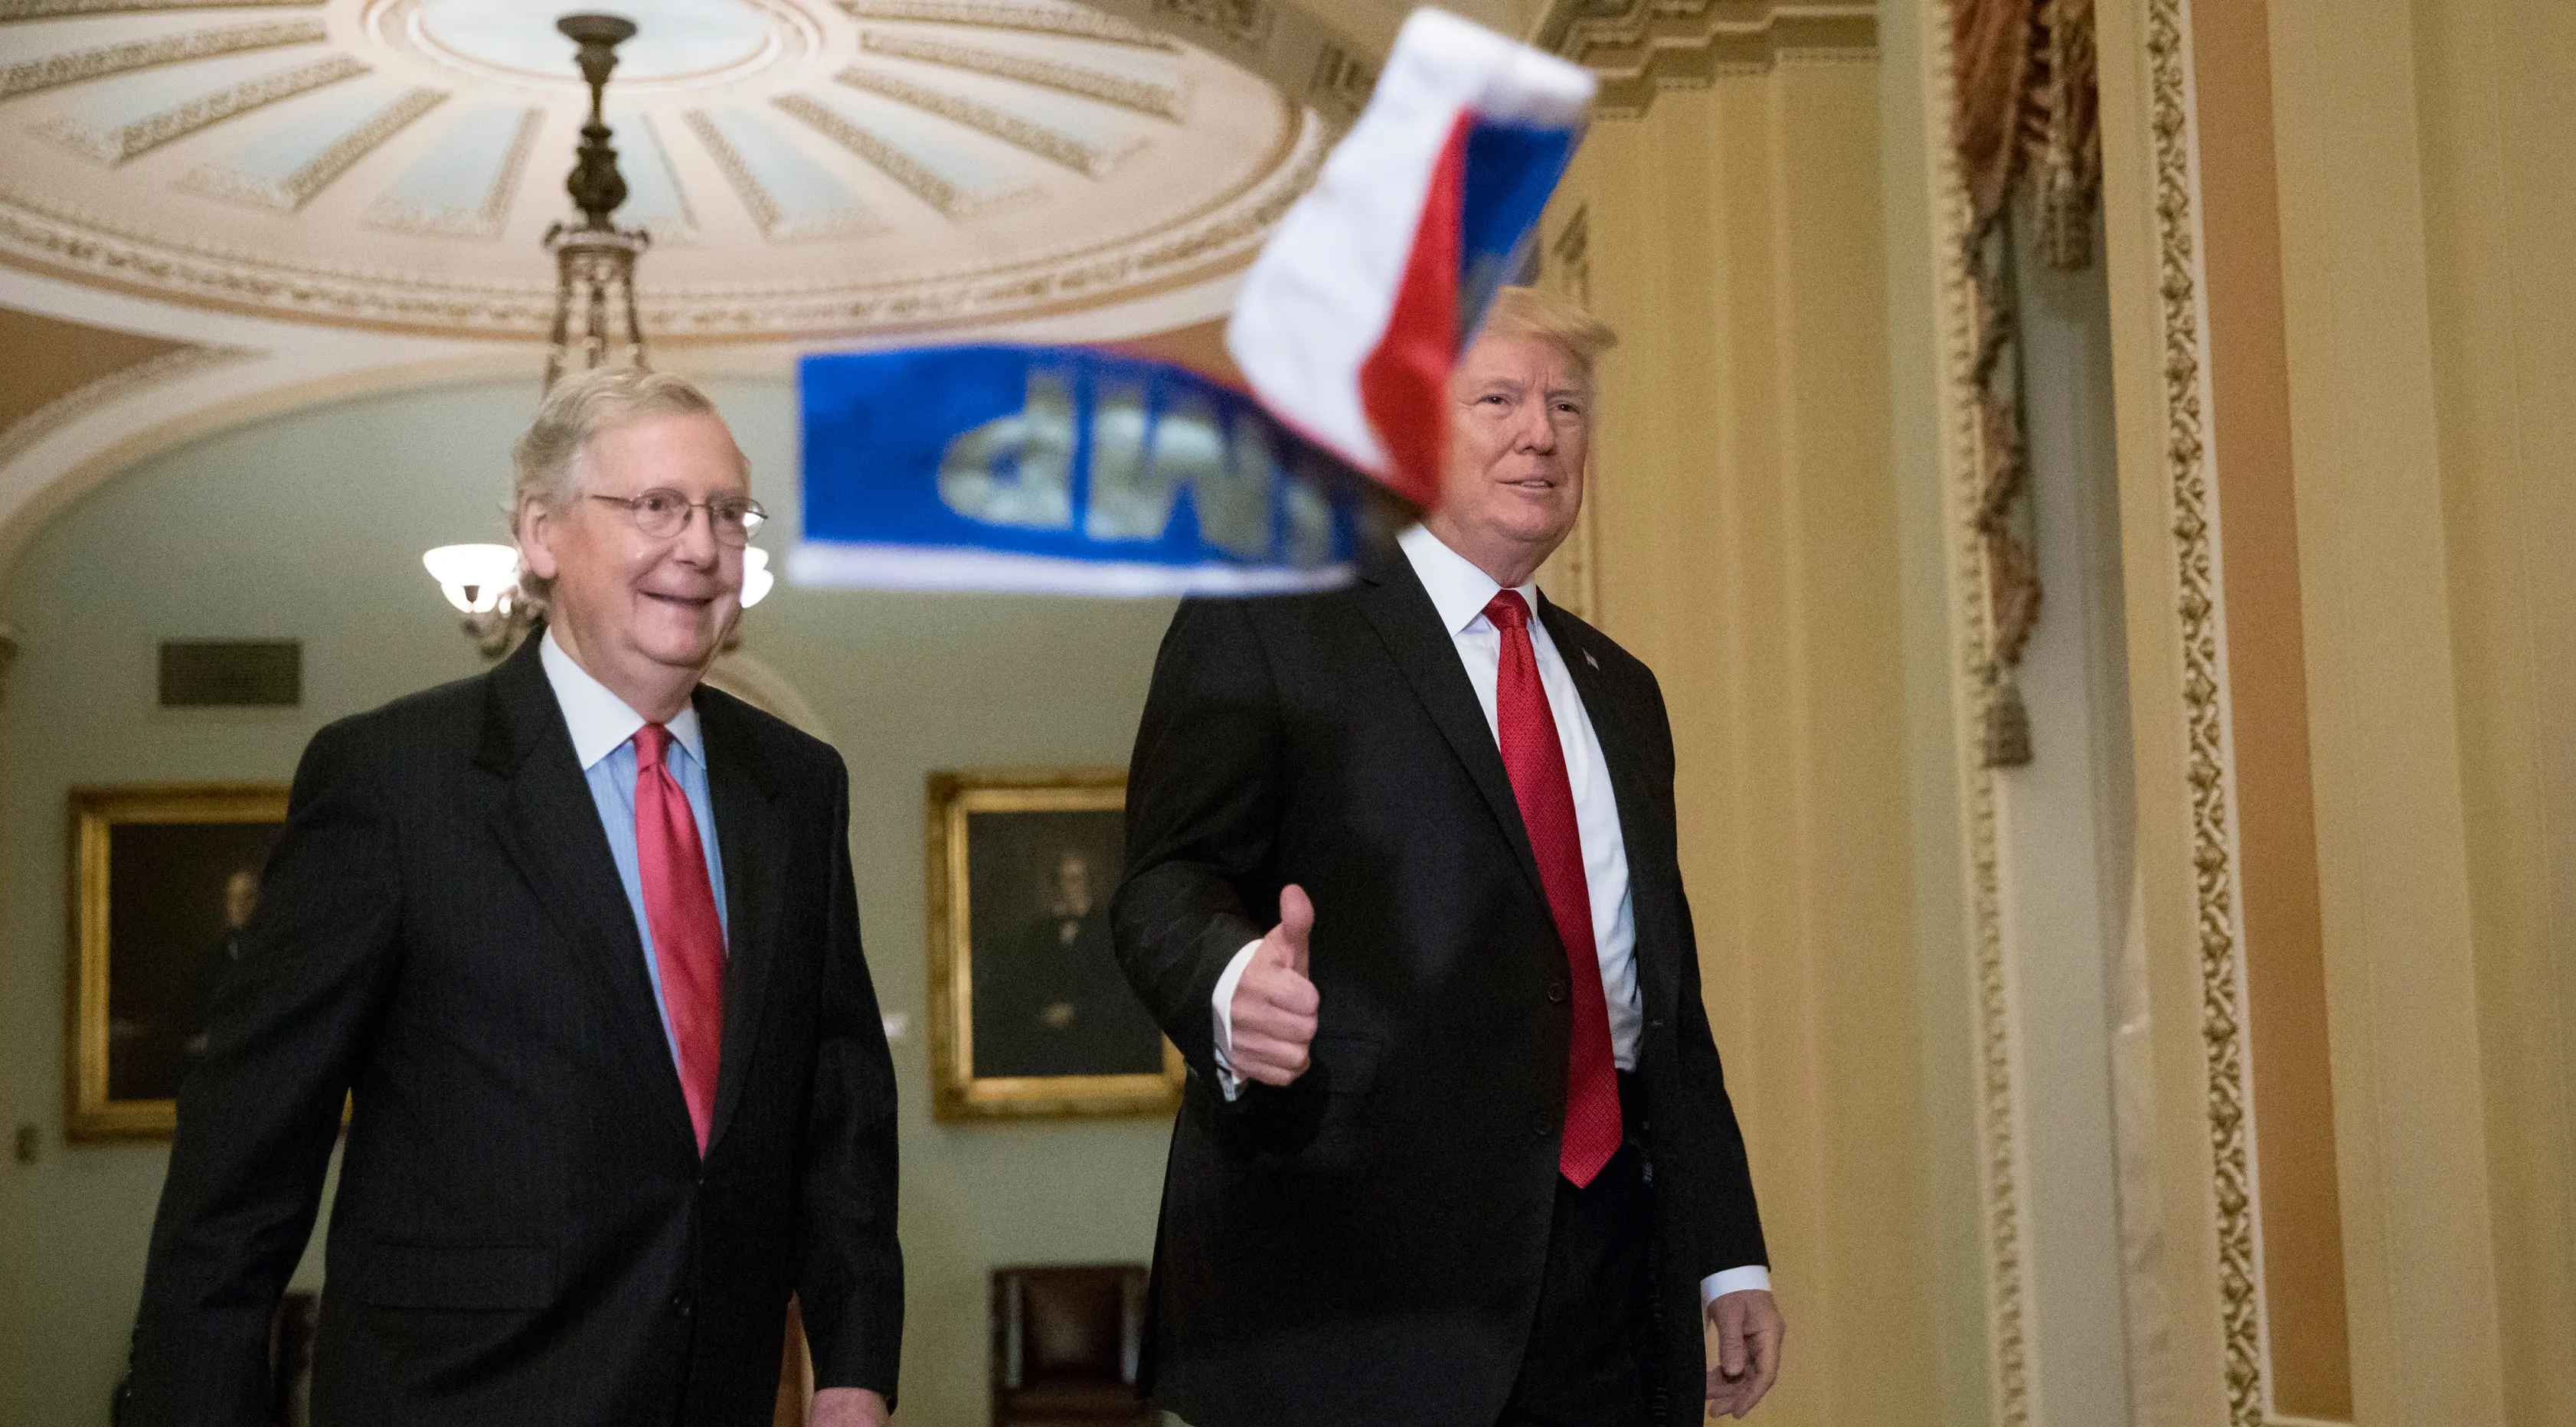 Presiden AS, Donald Trump mengacungkan jempol saat bendera Rusia berukuran kecil dilemparkan ke arahnya di gedung Capitol Hill, Washington DC, Selasa (24/10). Terlihat Trump tengah berjalan bersama senator Mitch McConnel. (AP/J. Scott Applewhite)